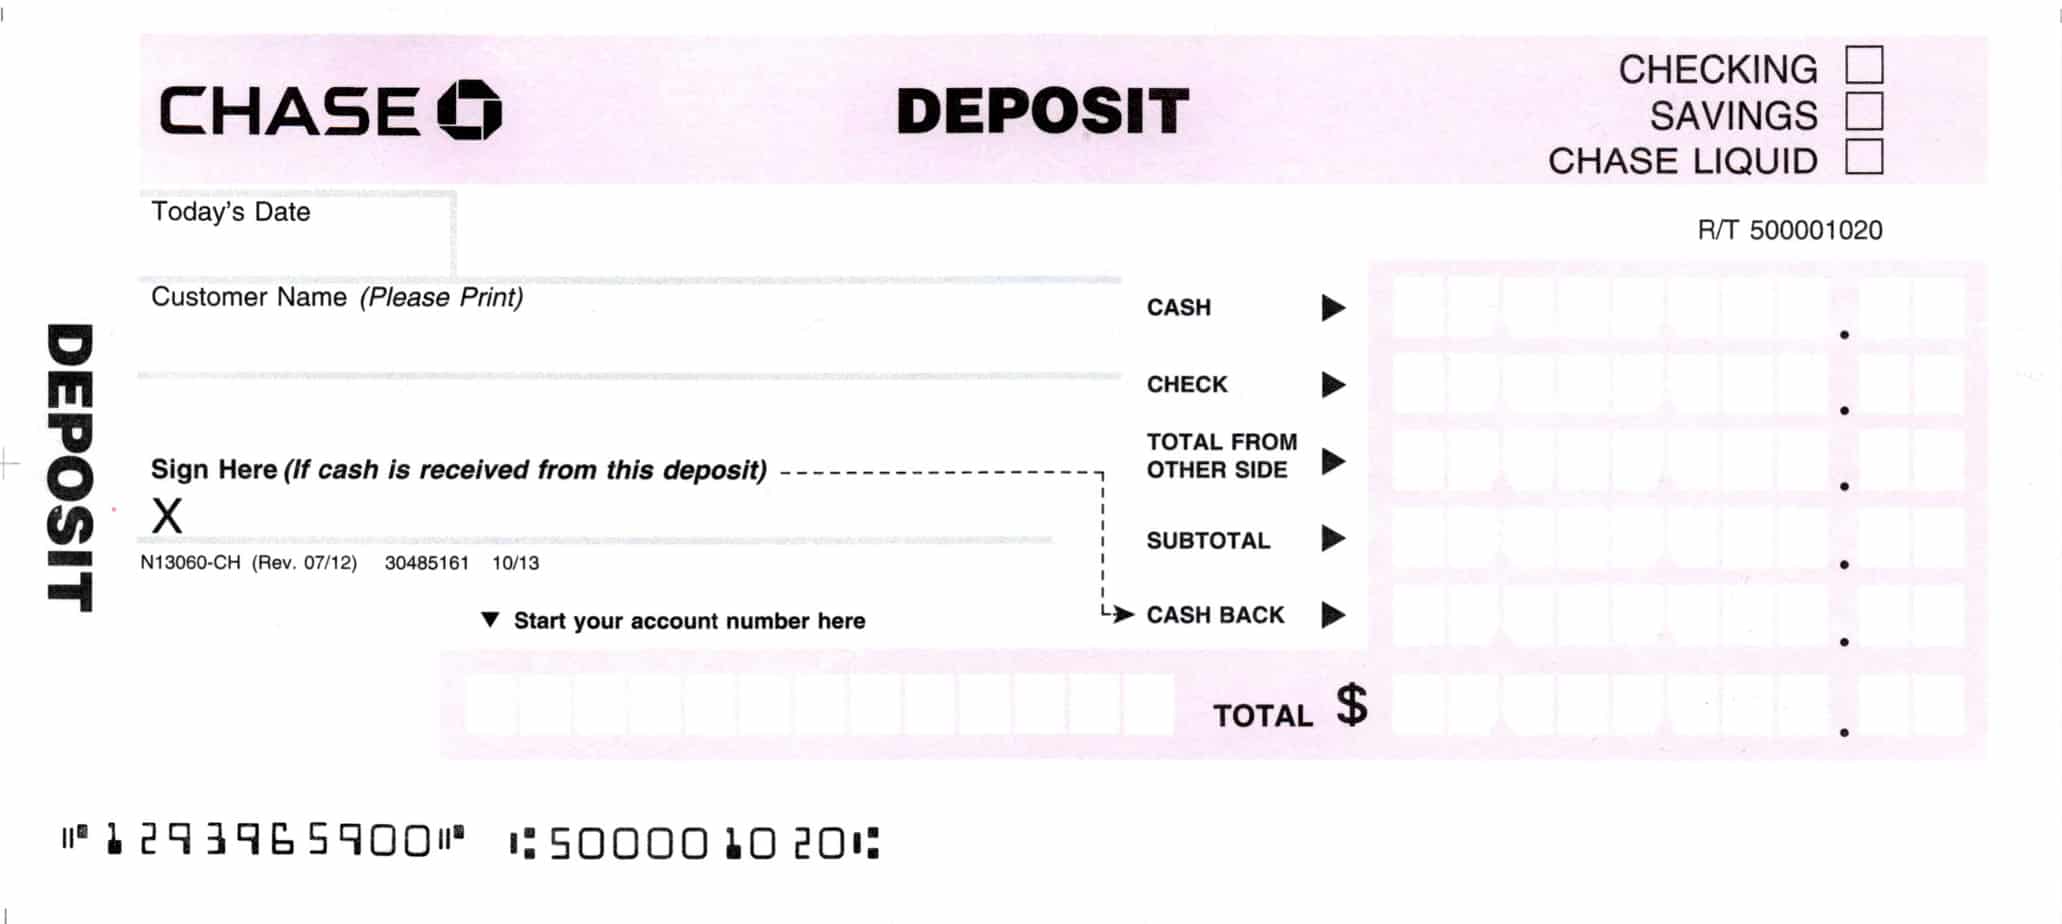 5 Bank Deposit Slip Templates - Excel xlts